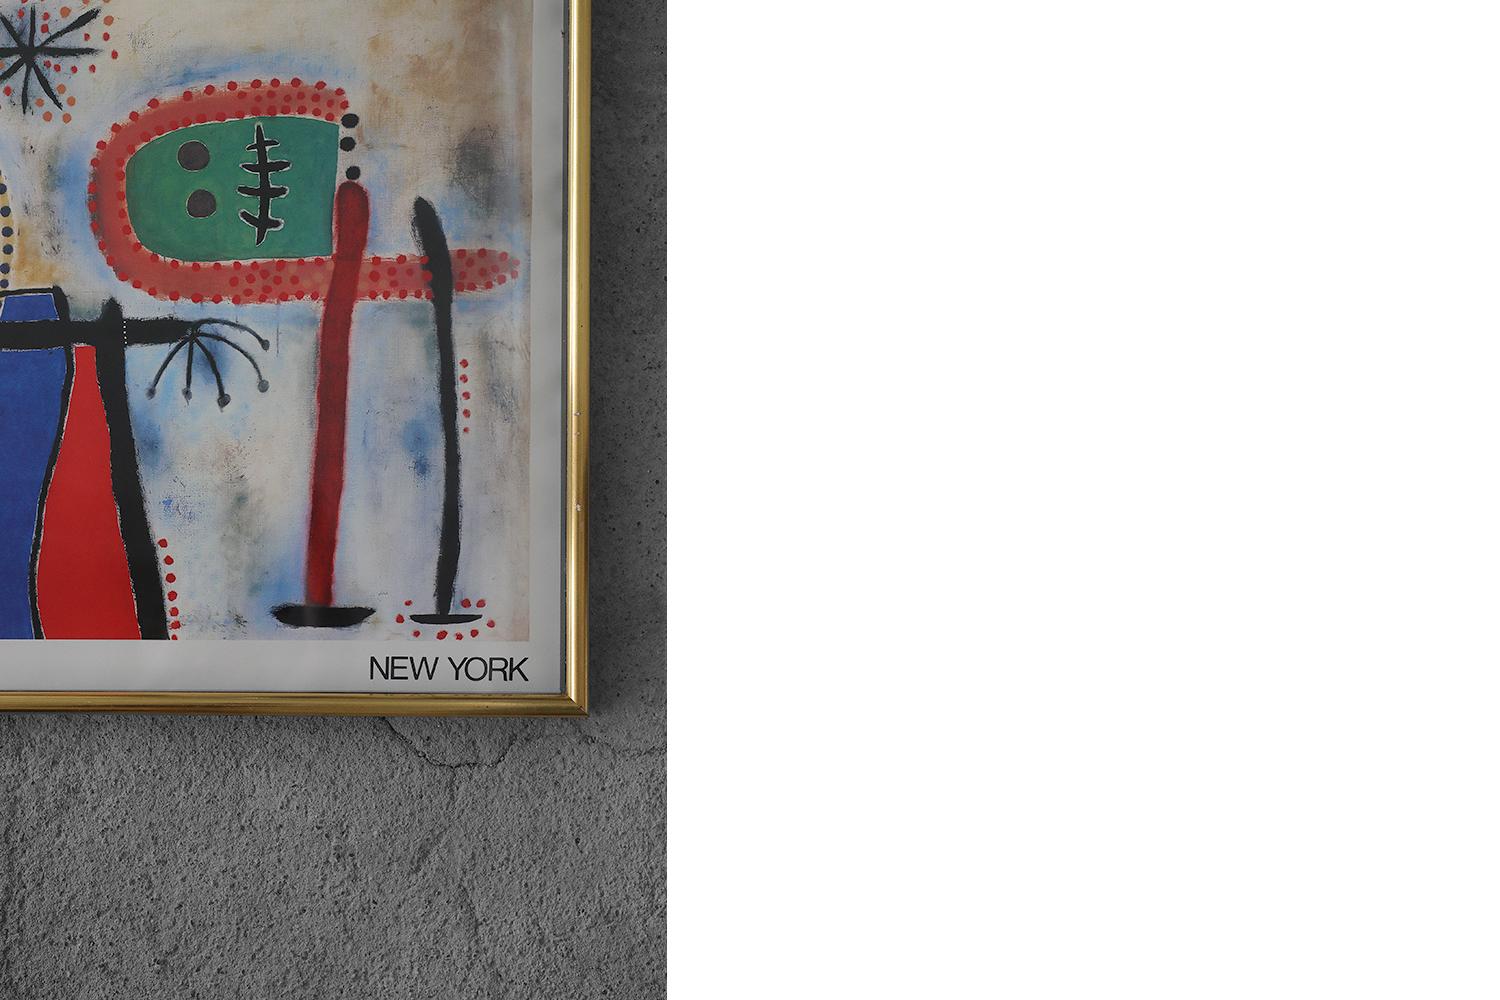 Mid-Century Modern Joan Miró, Exhibition Poster Solomon R. Guggenheim Museum, Nowy Jork, Framed For Sale